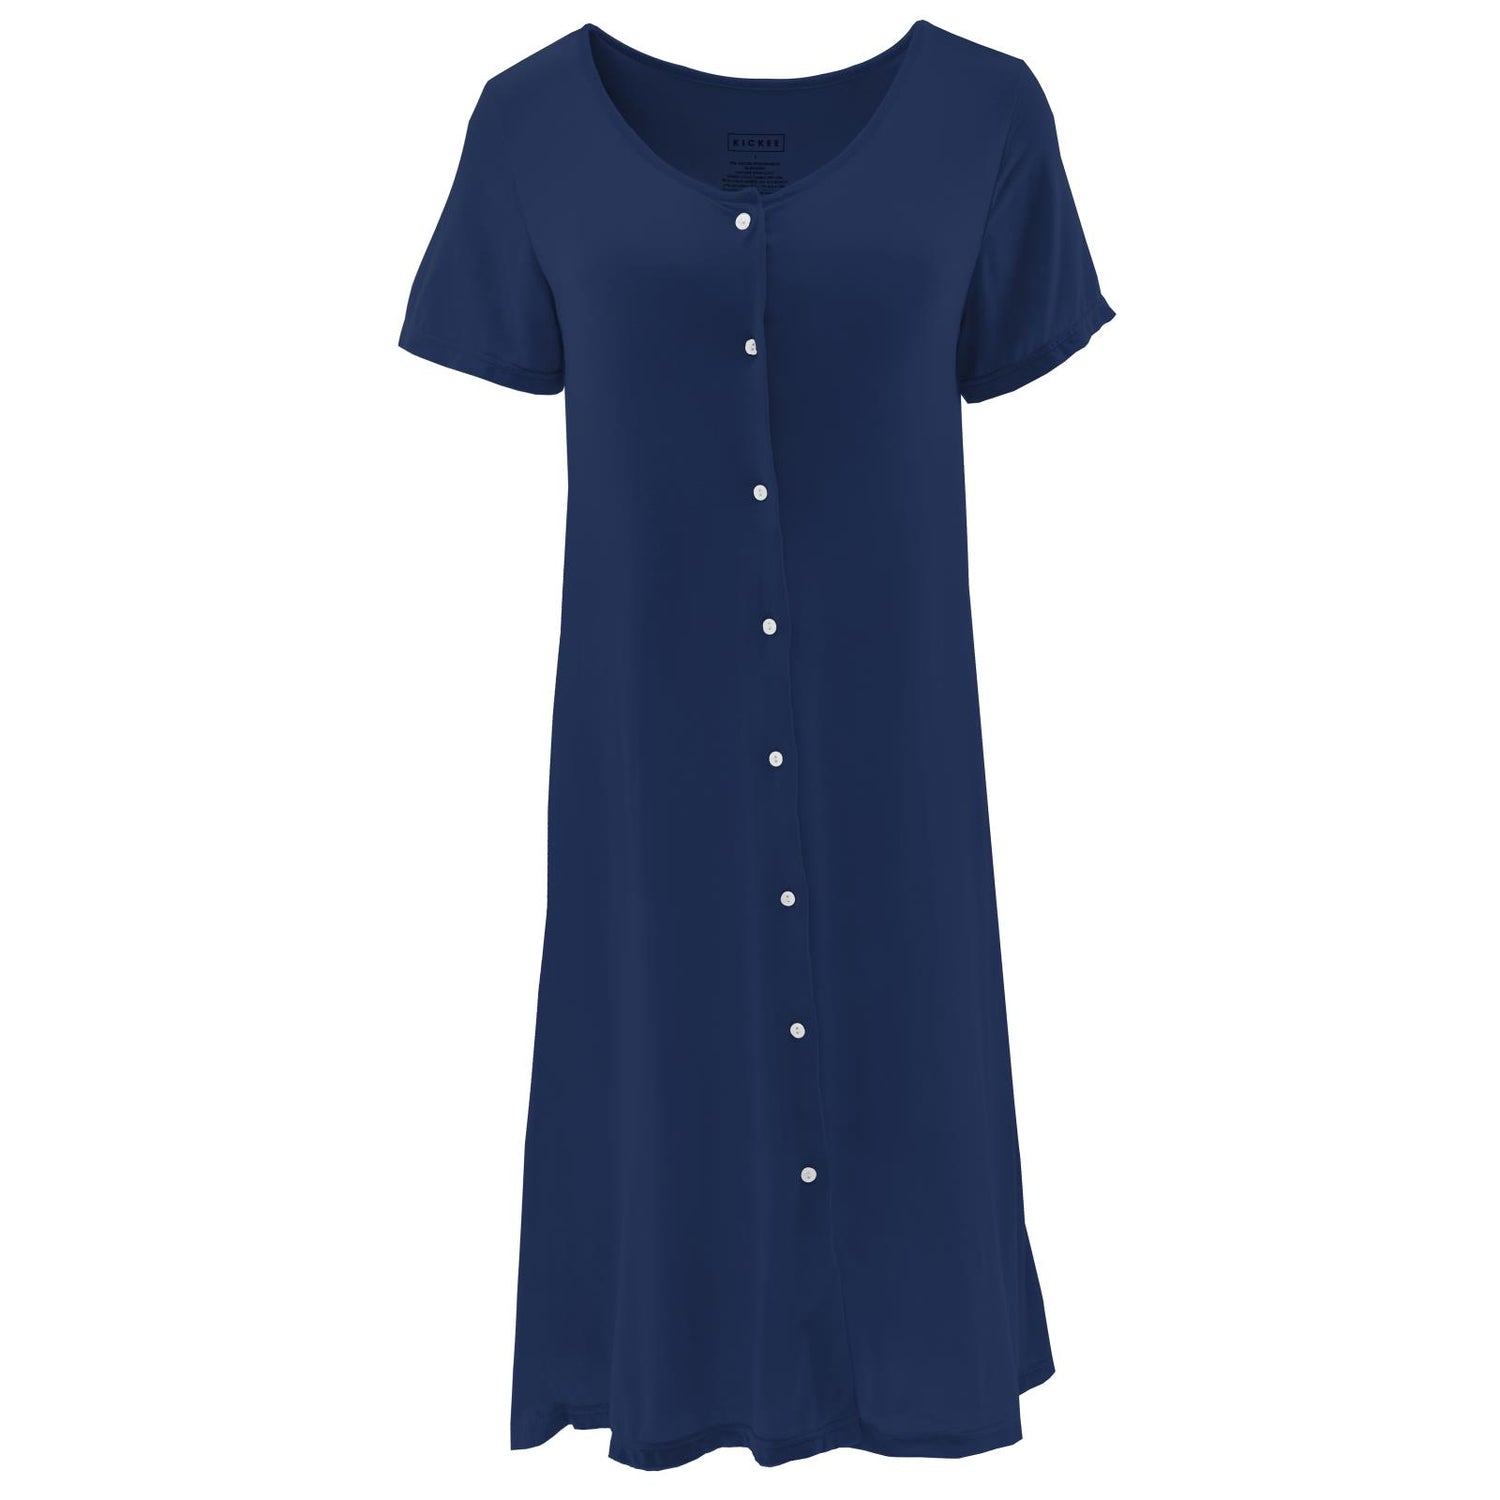 Women's Nursing Nightgown in Flag Blue